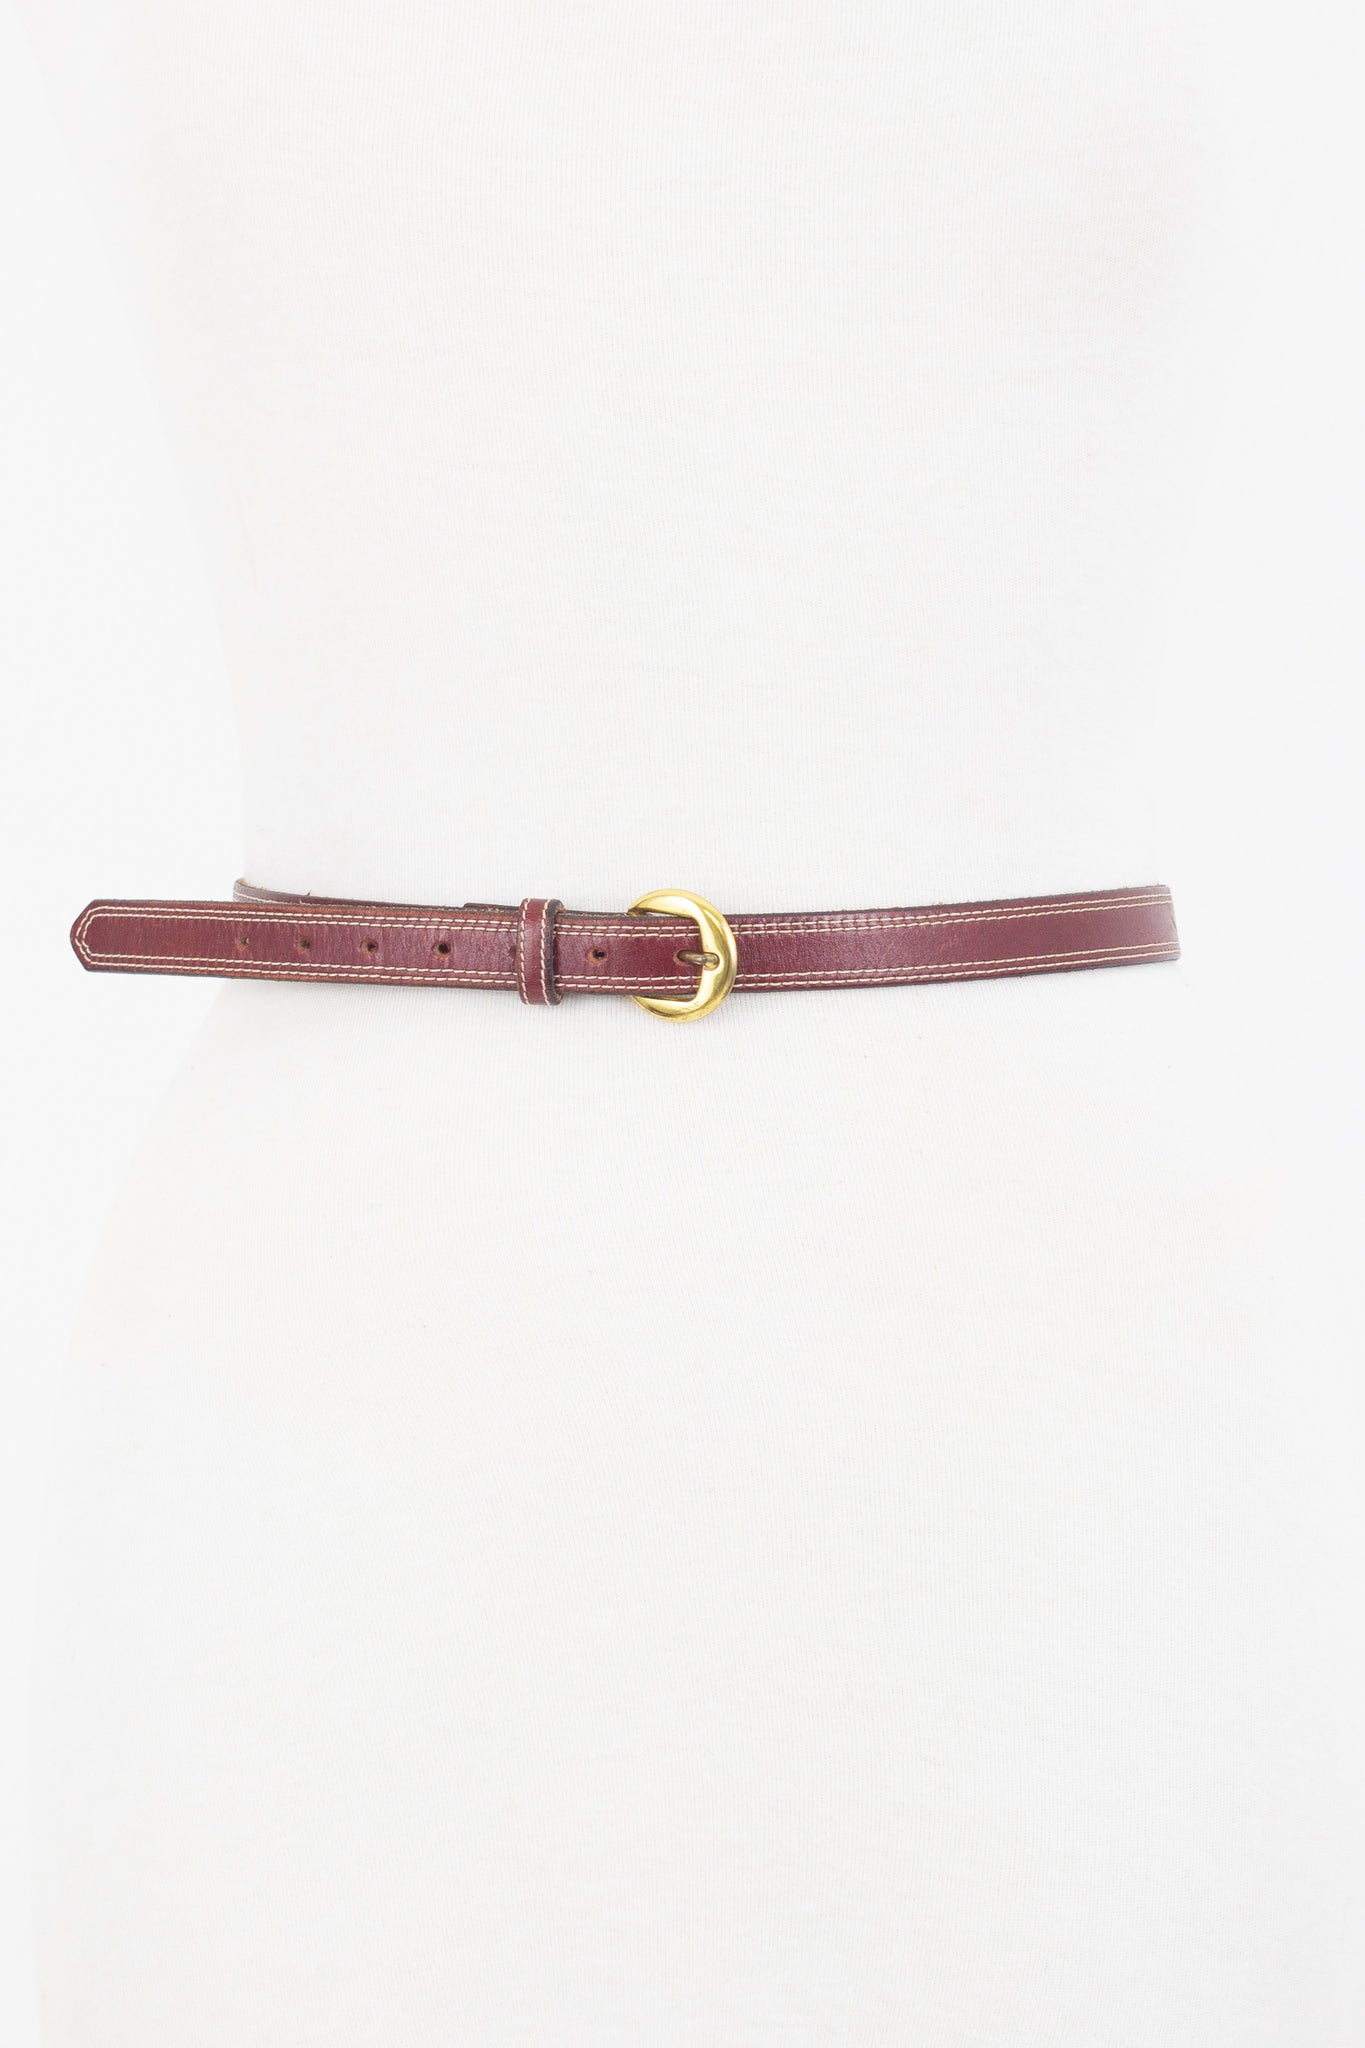 Thin Mahogany Leather Belt with Shiny Gold Buckle